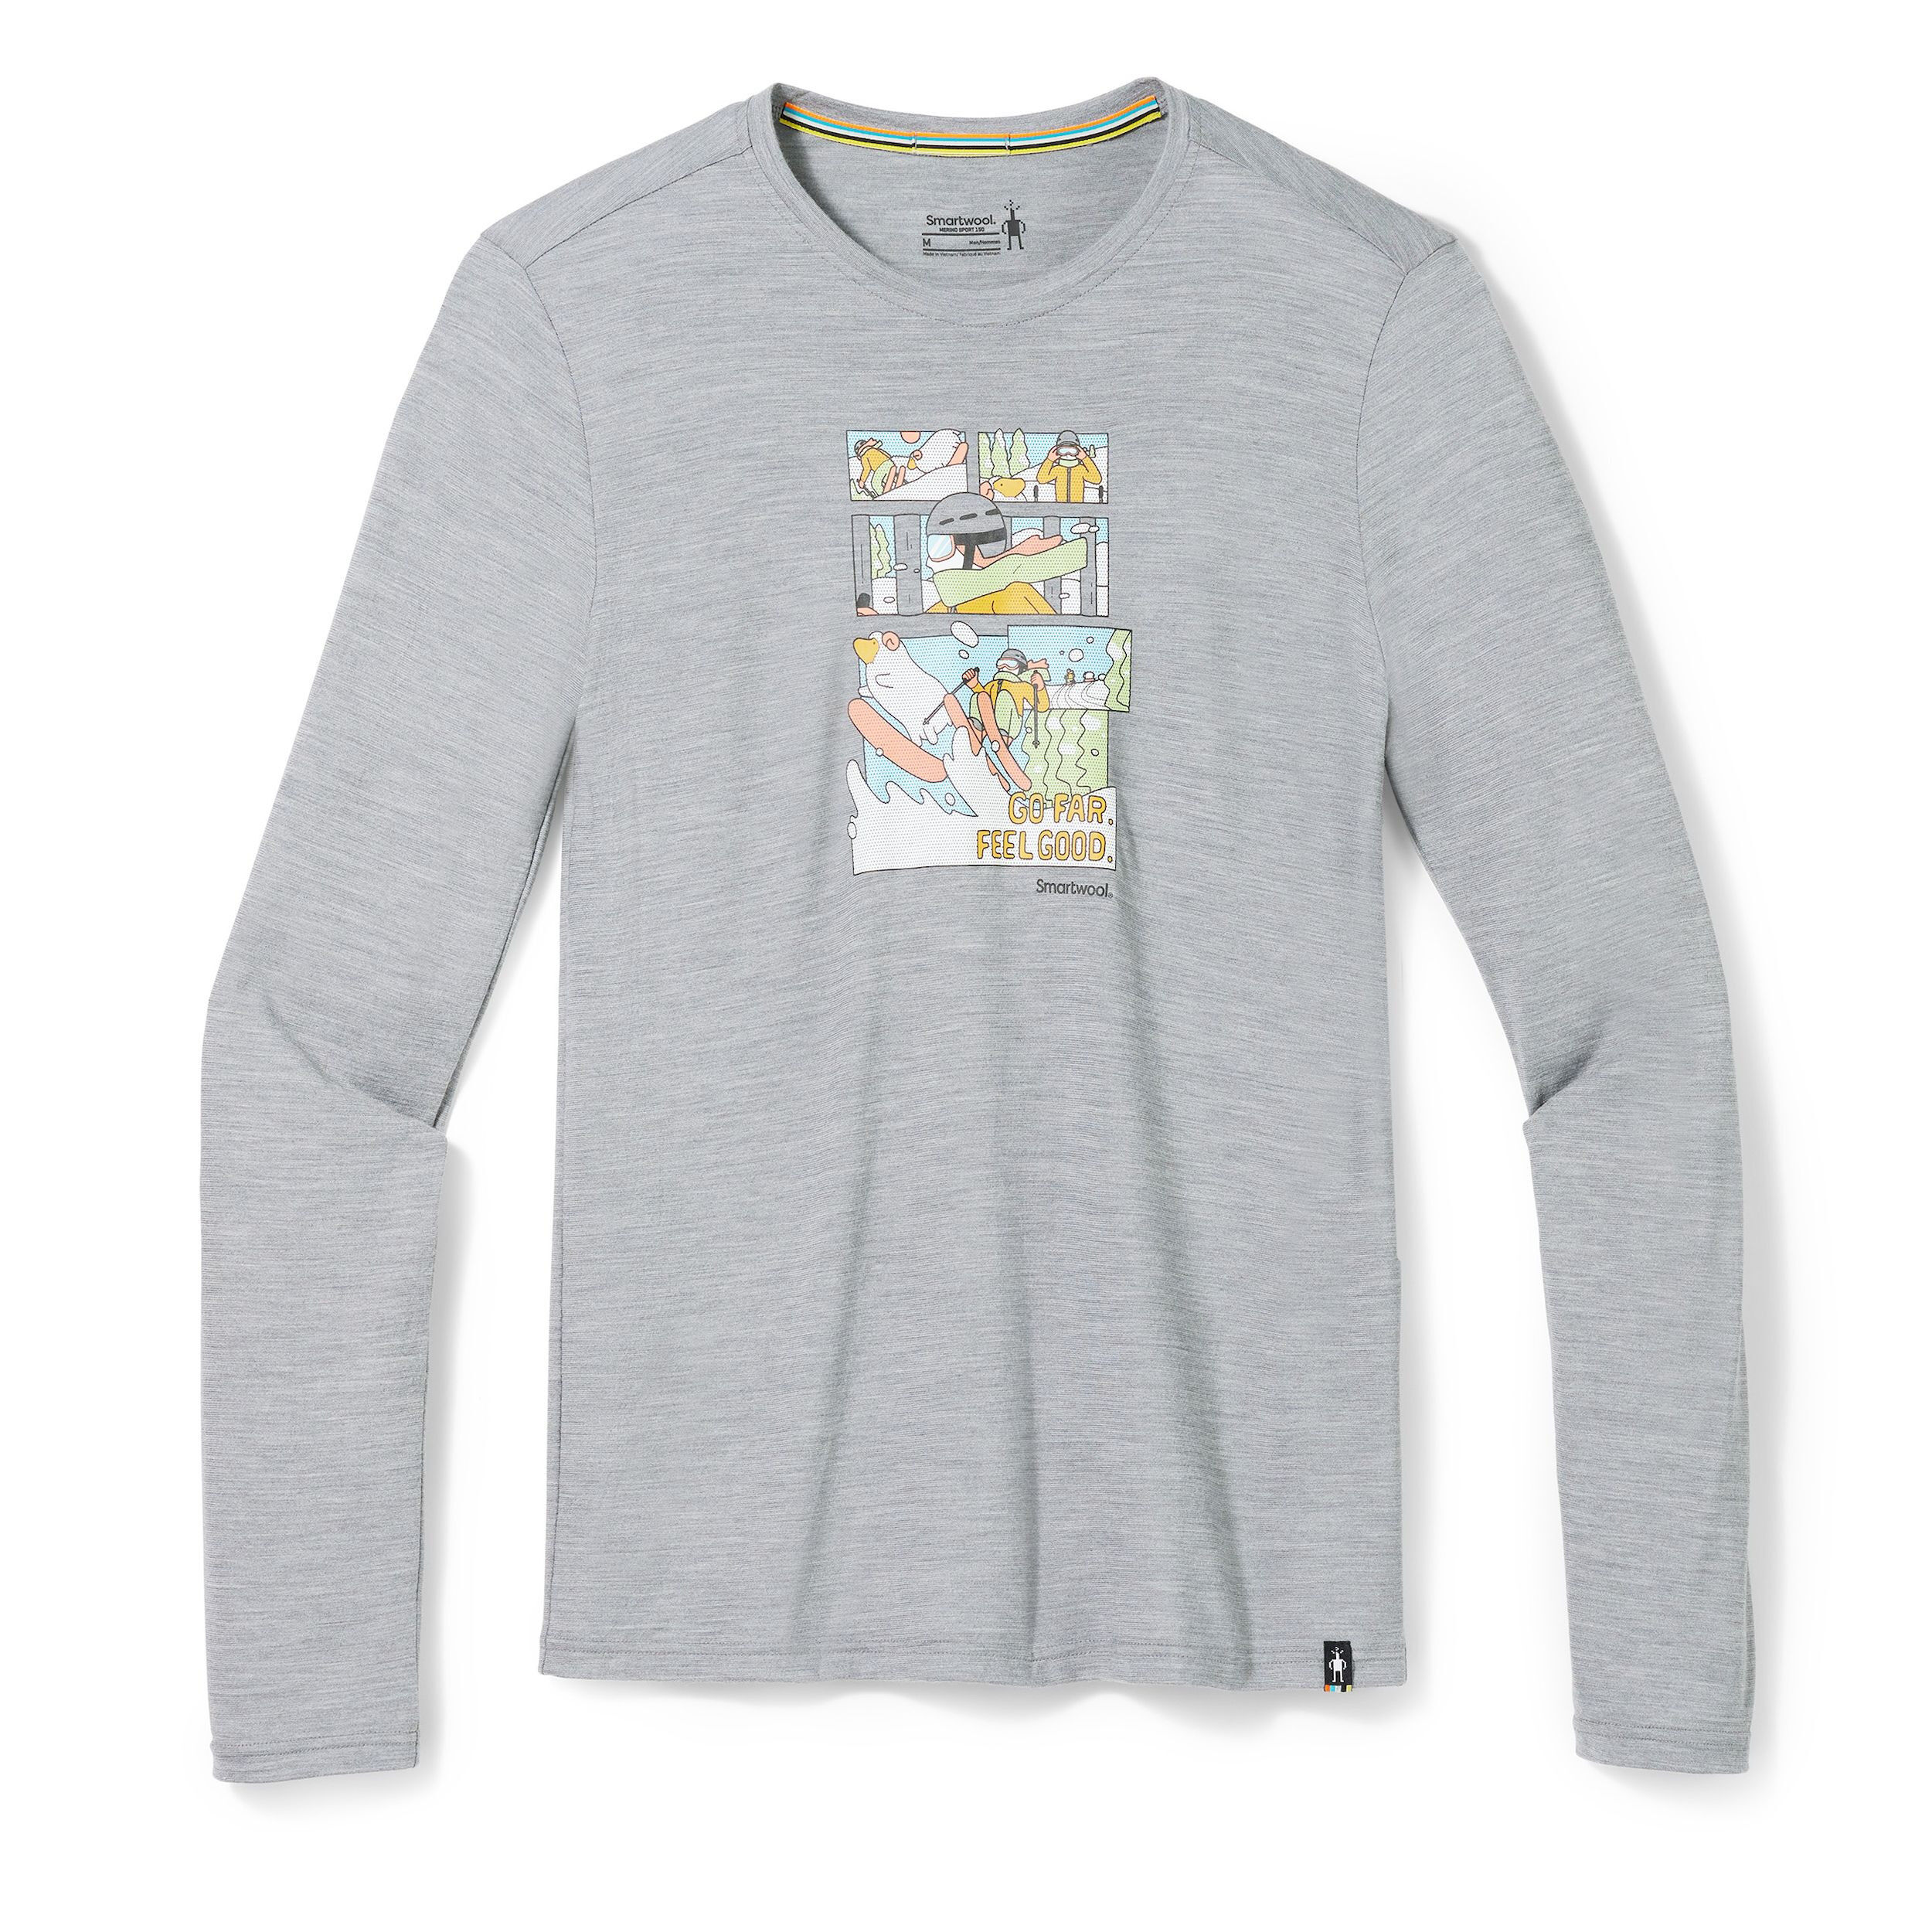 Smartwool Winter Adventure Long Sleeve Graphic Tee Slim Fit - T-shirt - Herr